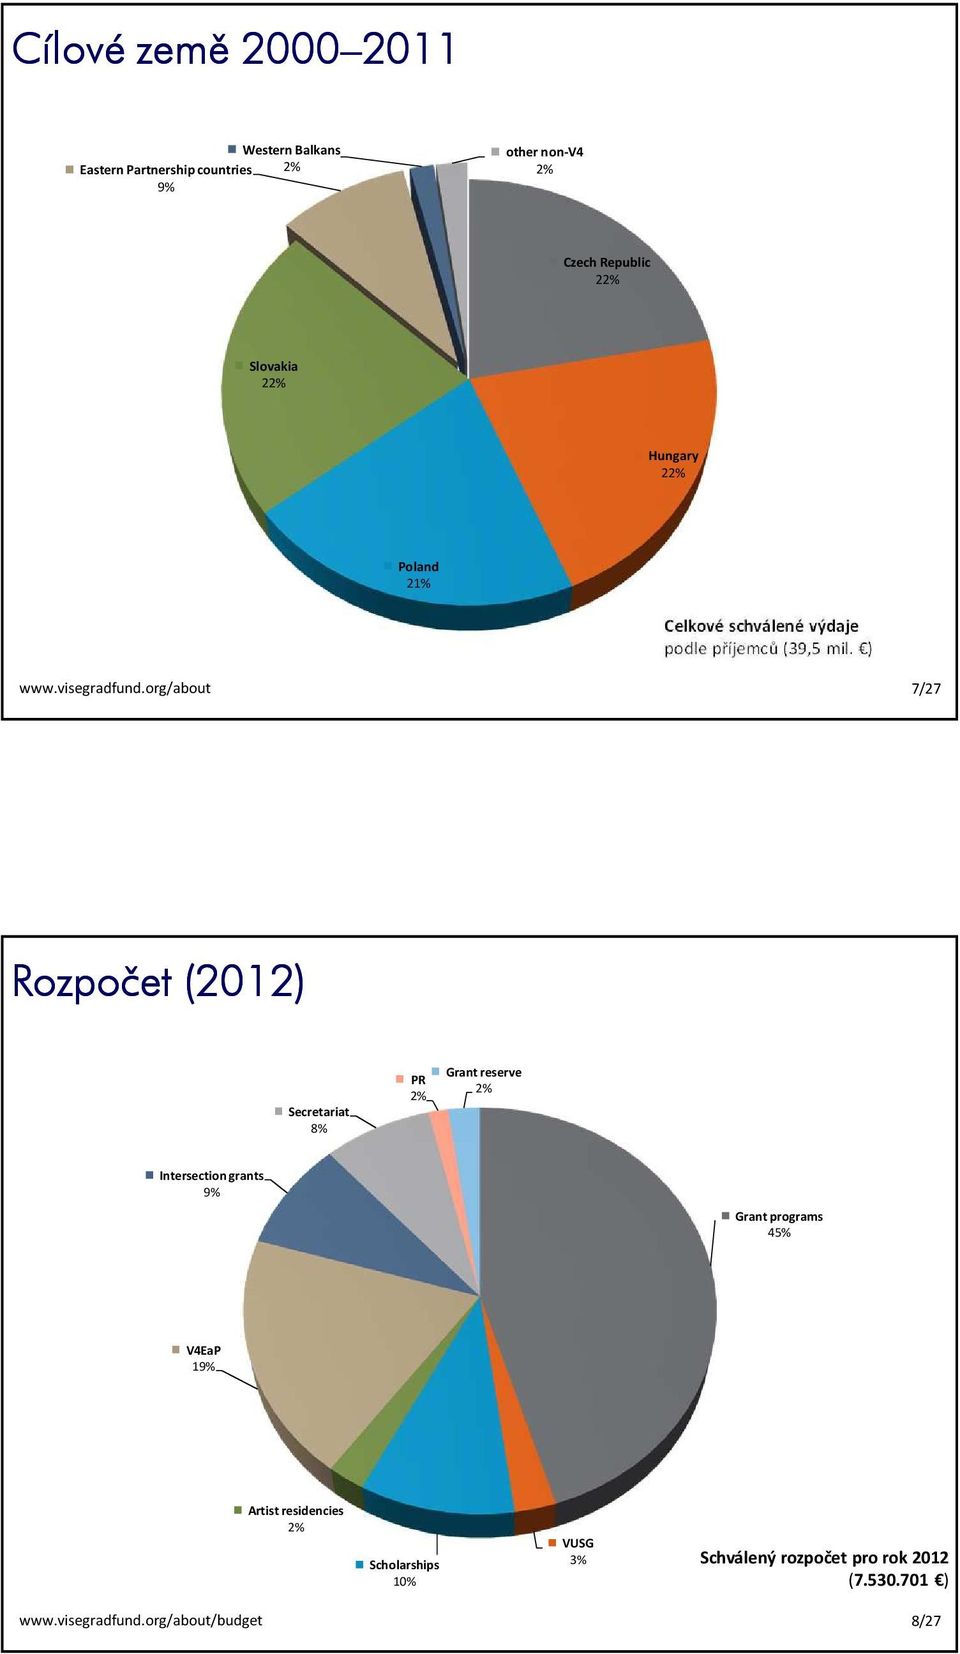 org/about 7/27 Rozpočet (2012) Secretariat 8% PR 2% Grant reserve 2% Intersection grants 9% Grant programs 45% V4EaP